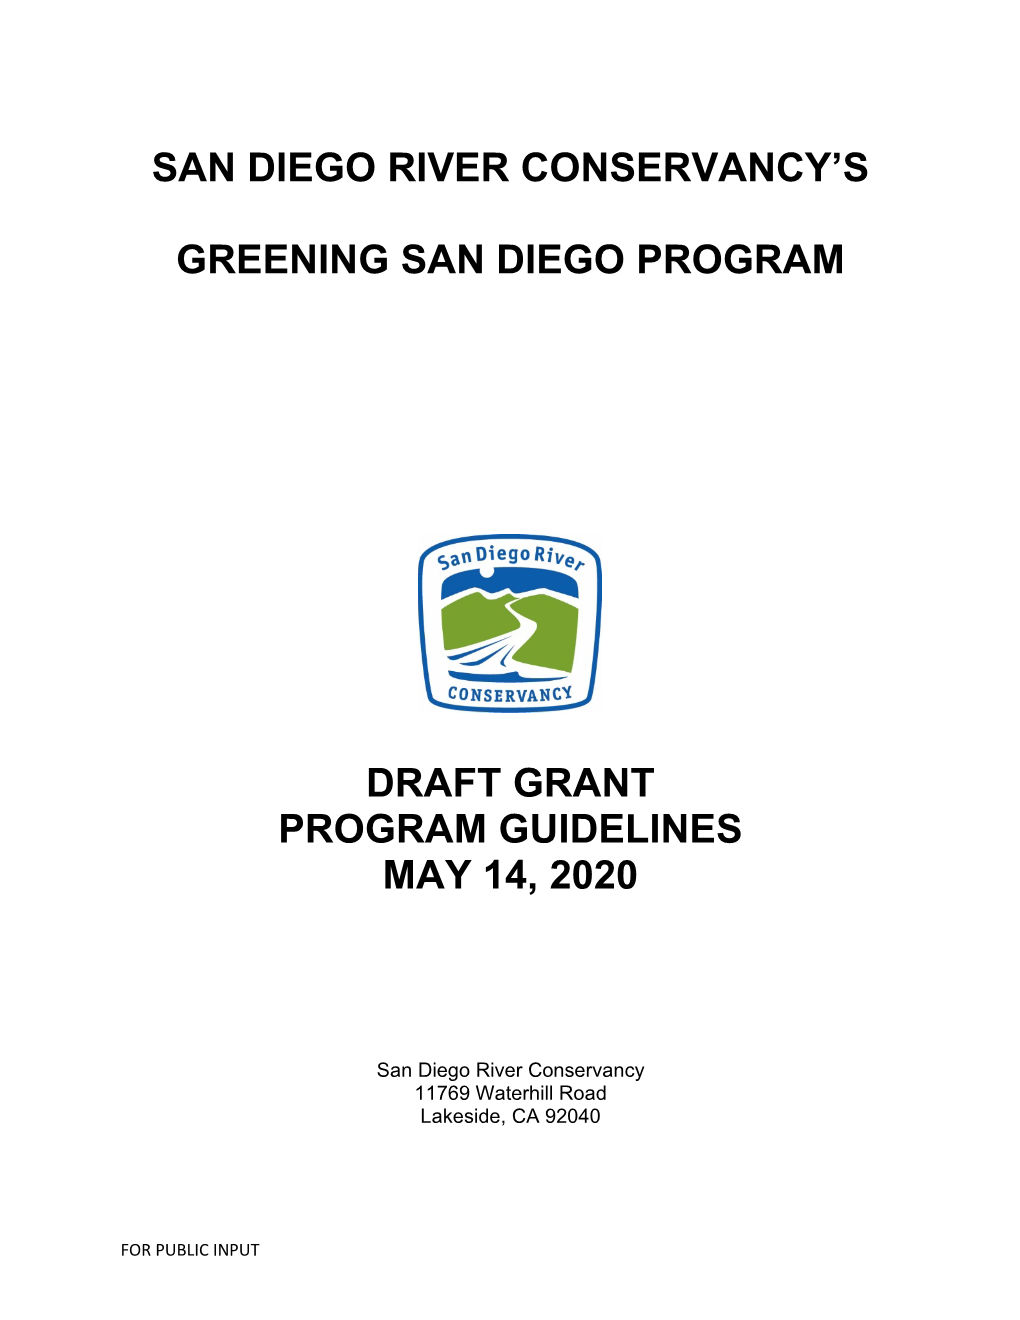 Draft Guidelines for Greening San Diego Program